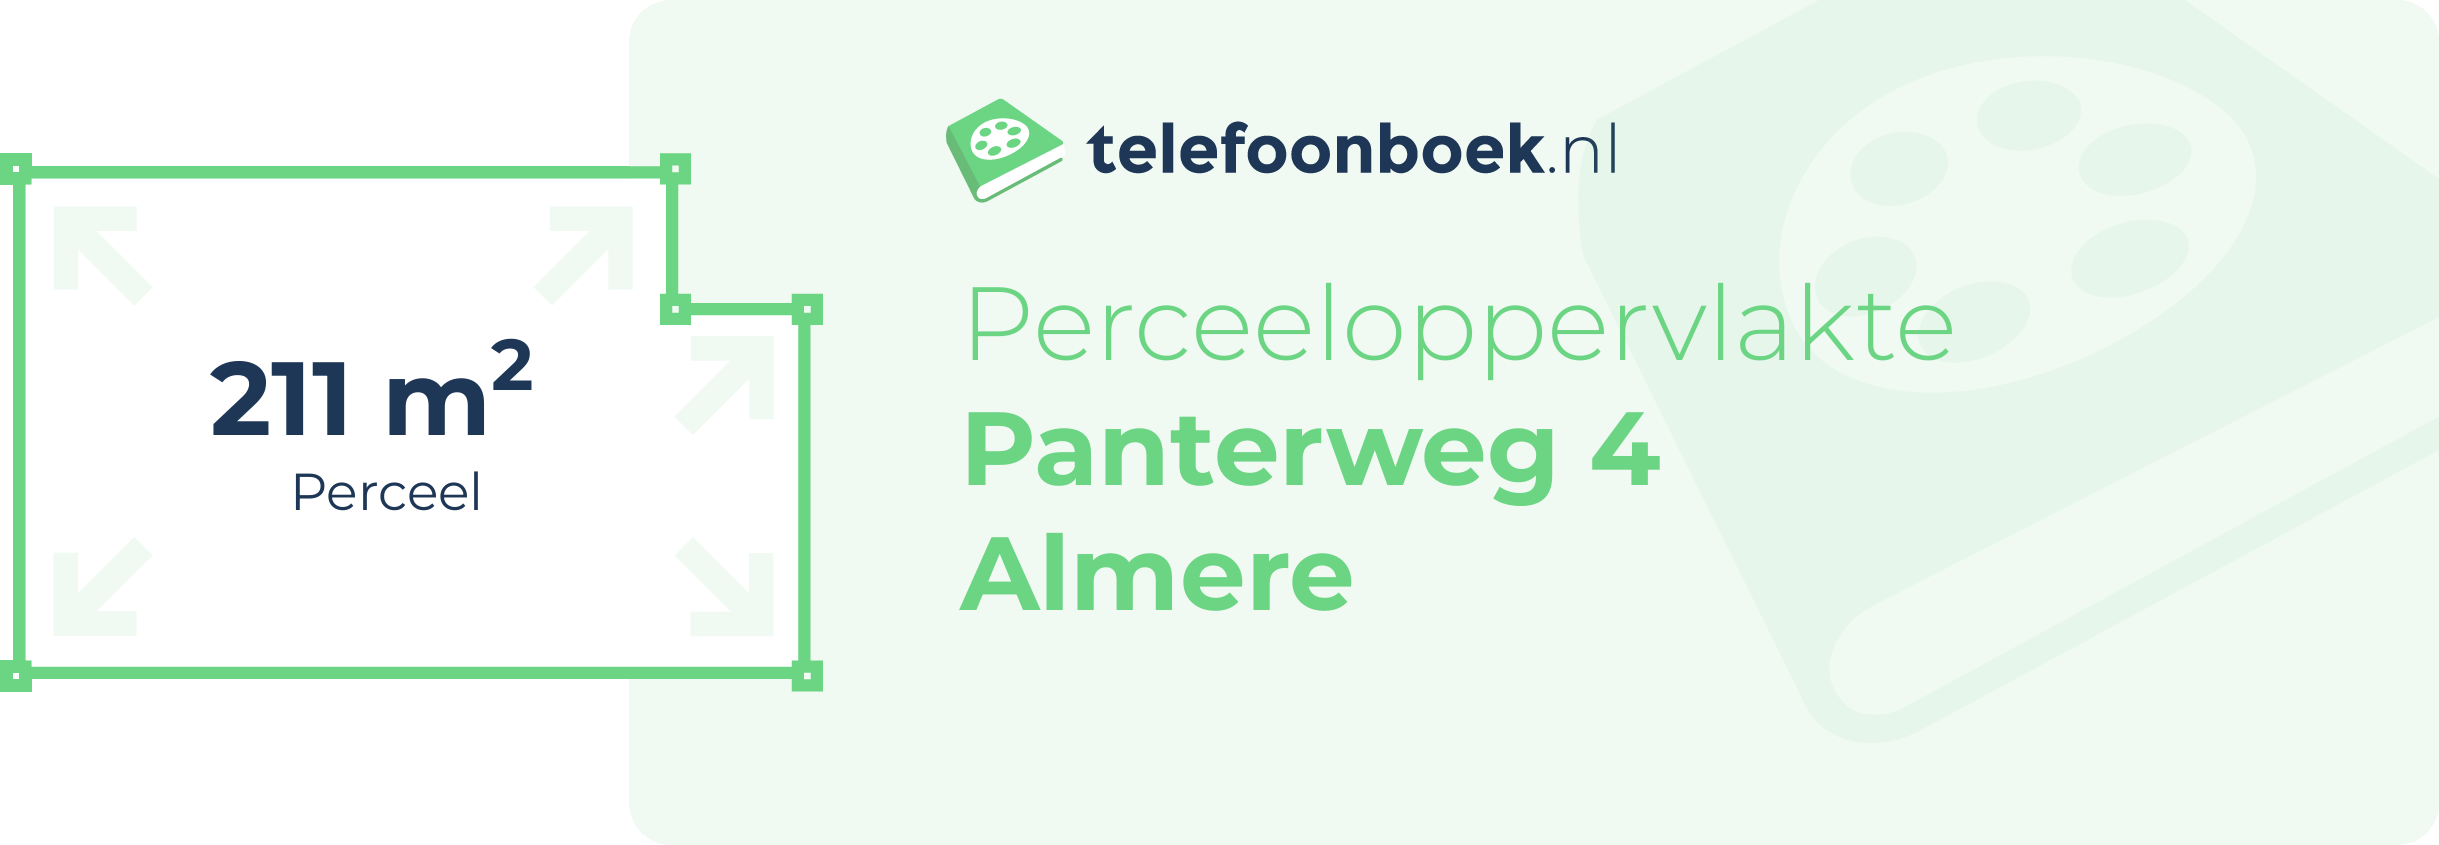 Perceeloppervlakte Panterweg 4 Almere